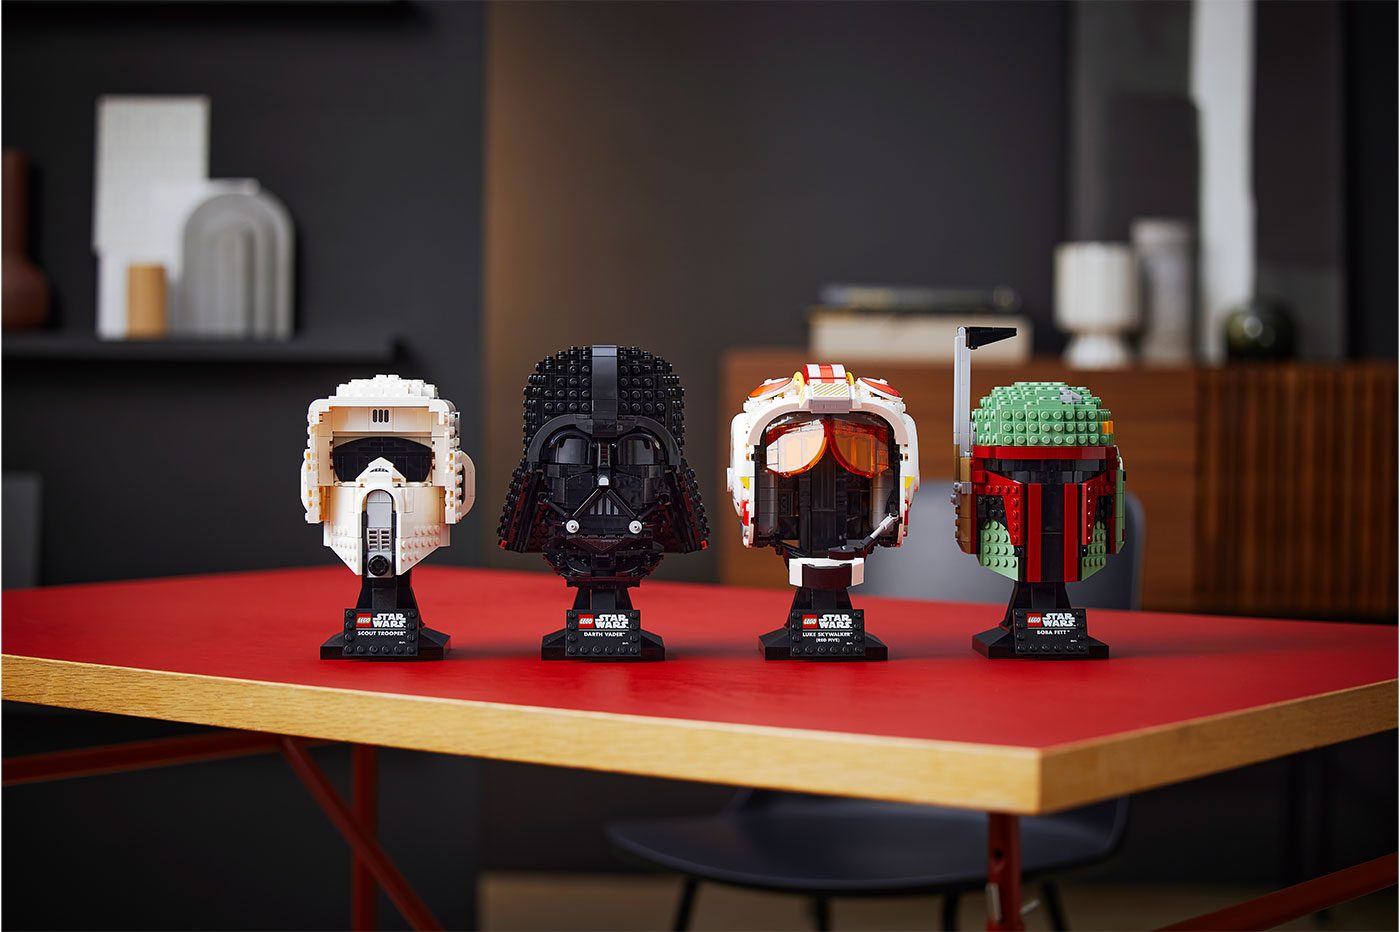 Luke Skywalker, le Mandalorian, Dark Trooper : de nouveaux casques LEGO  Star Wars arrivent !